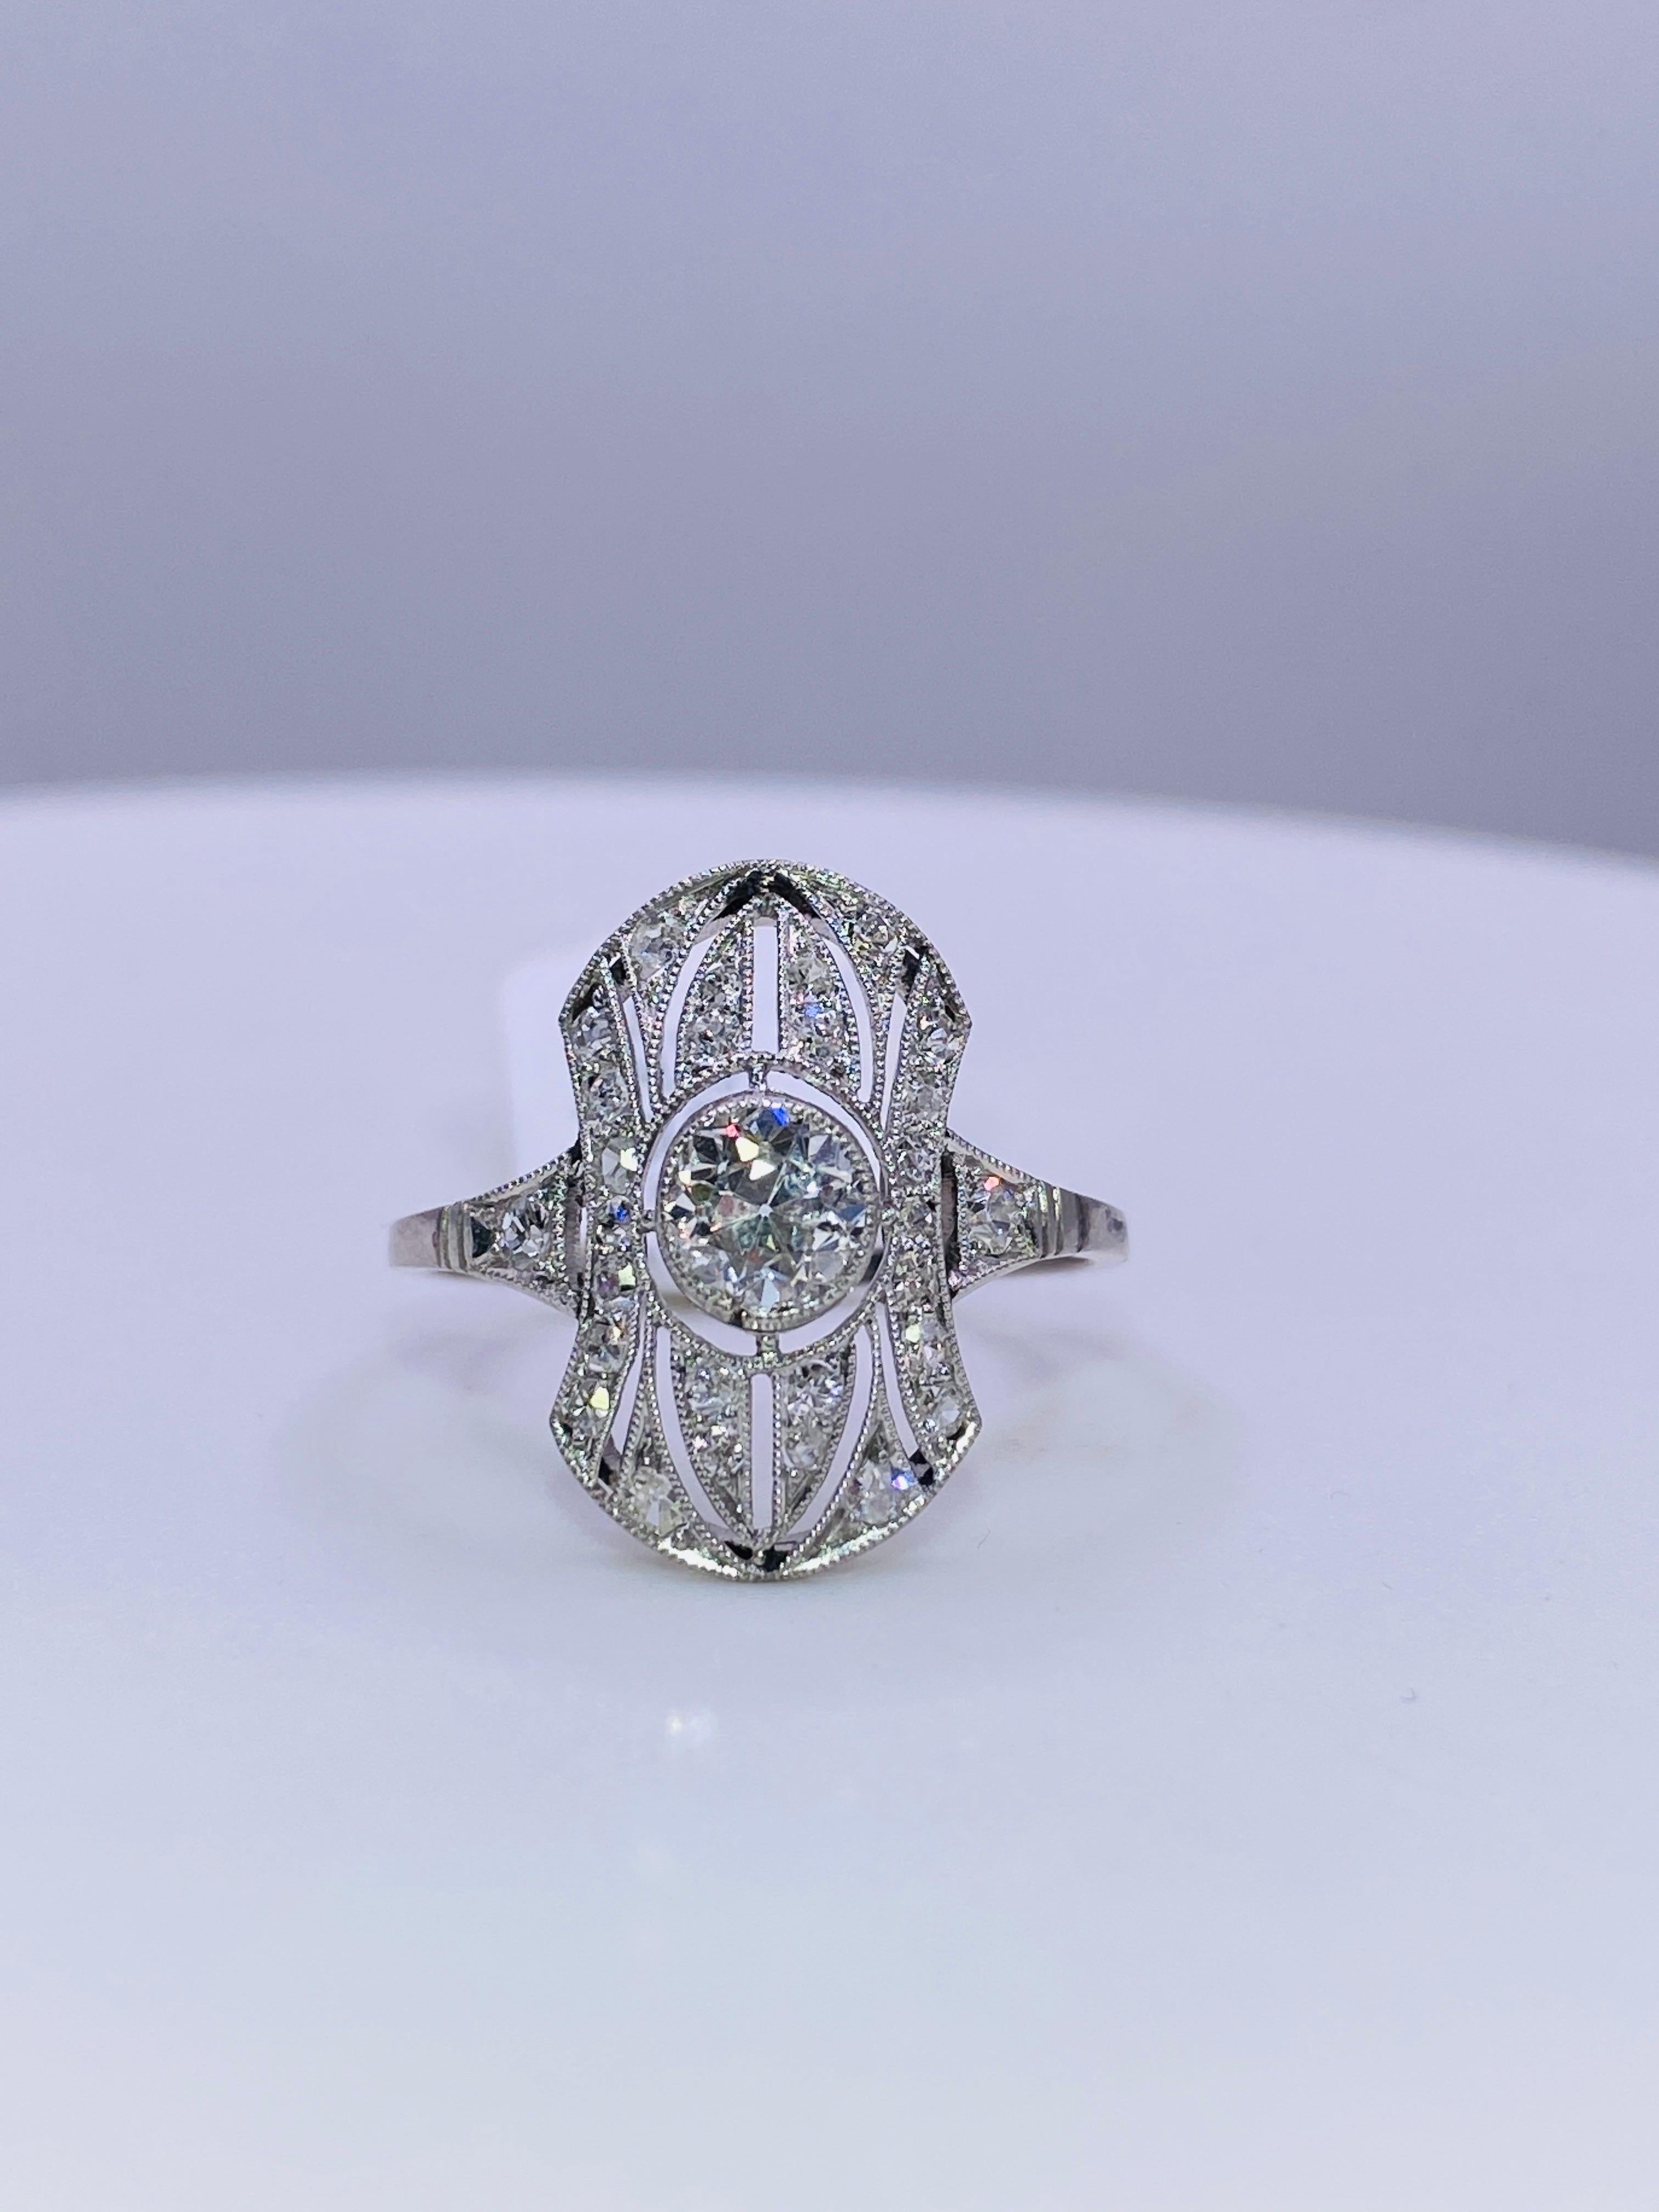 Platinum Art Deco Ring with .52 carat Old European Cut center diamond and .27 carat total weight smaller diamonds. Size 7.5+
